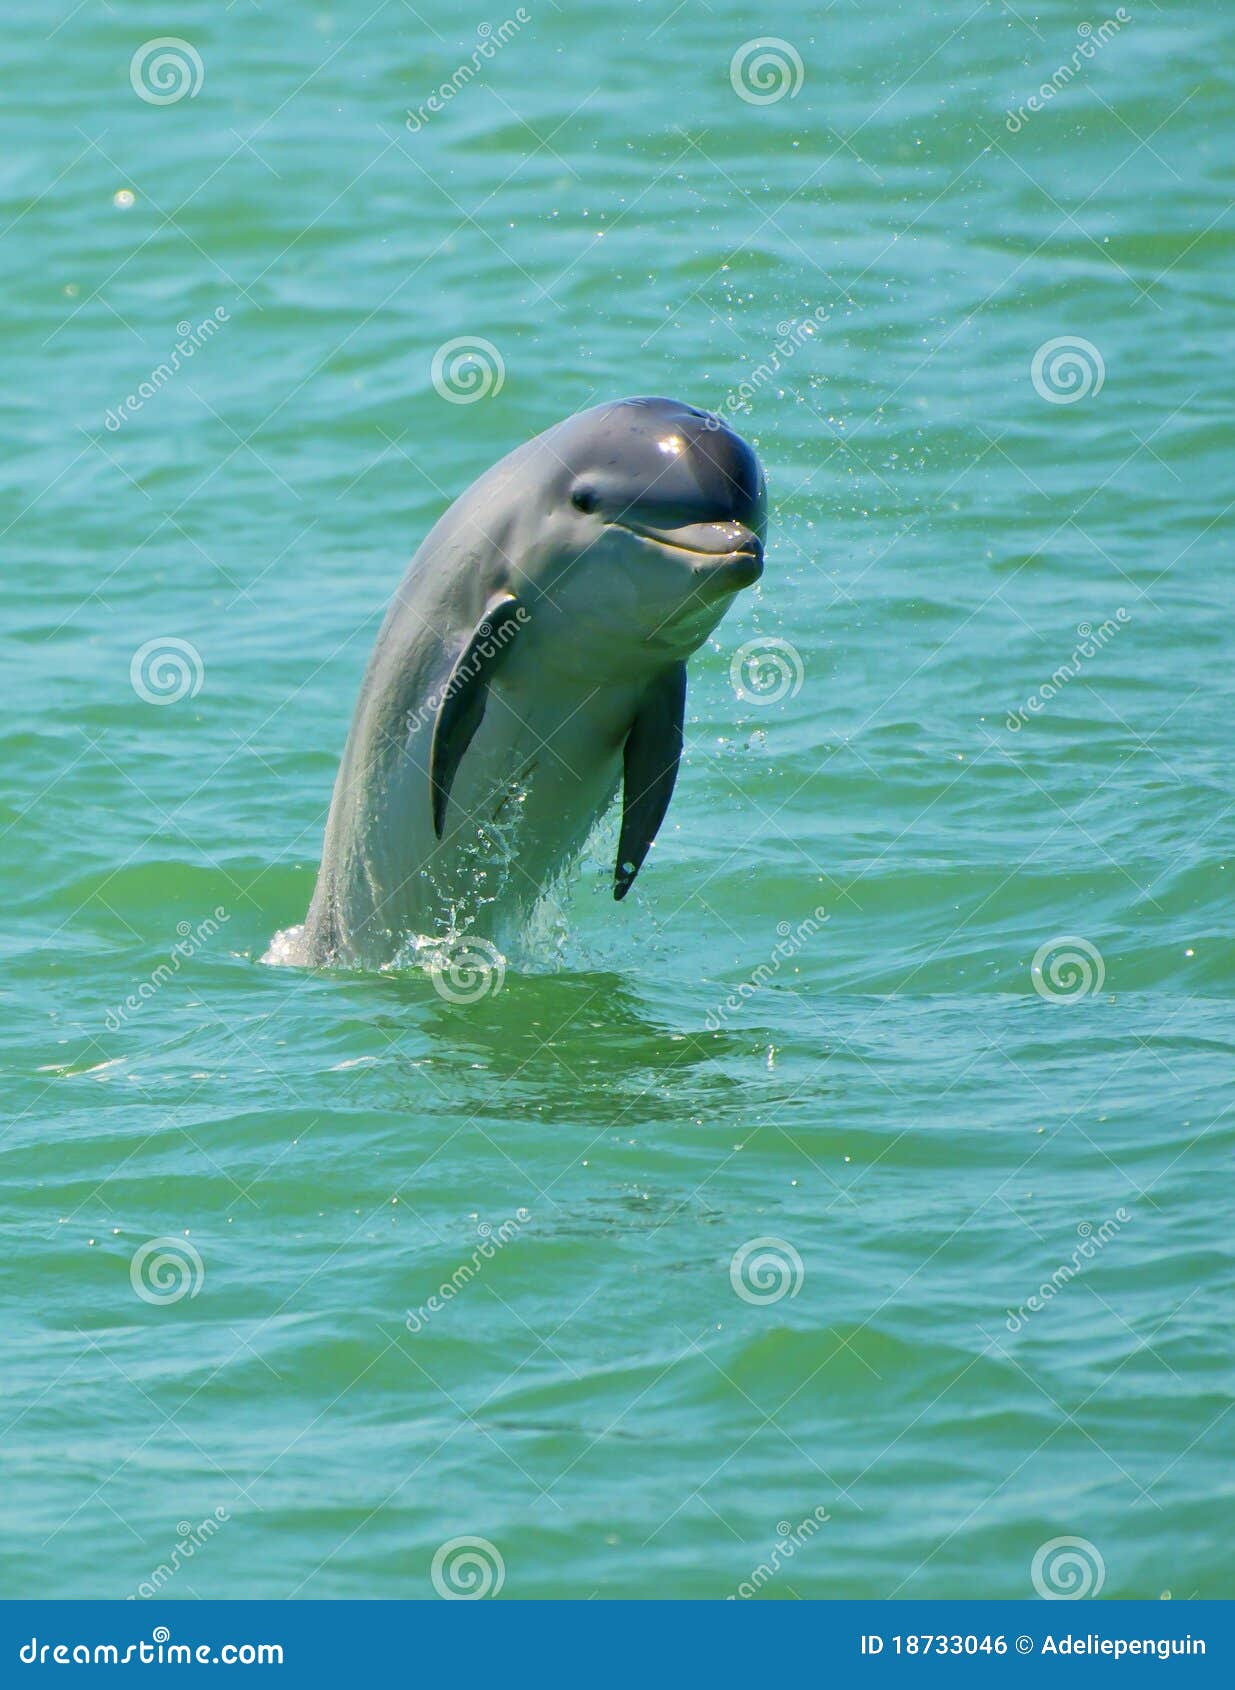 dolphin jumping, florida